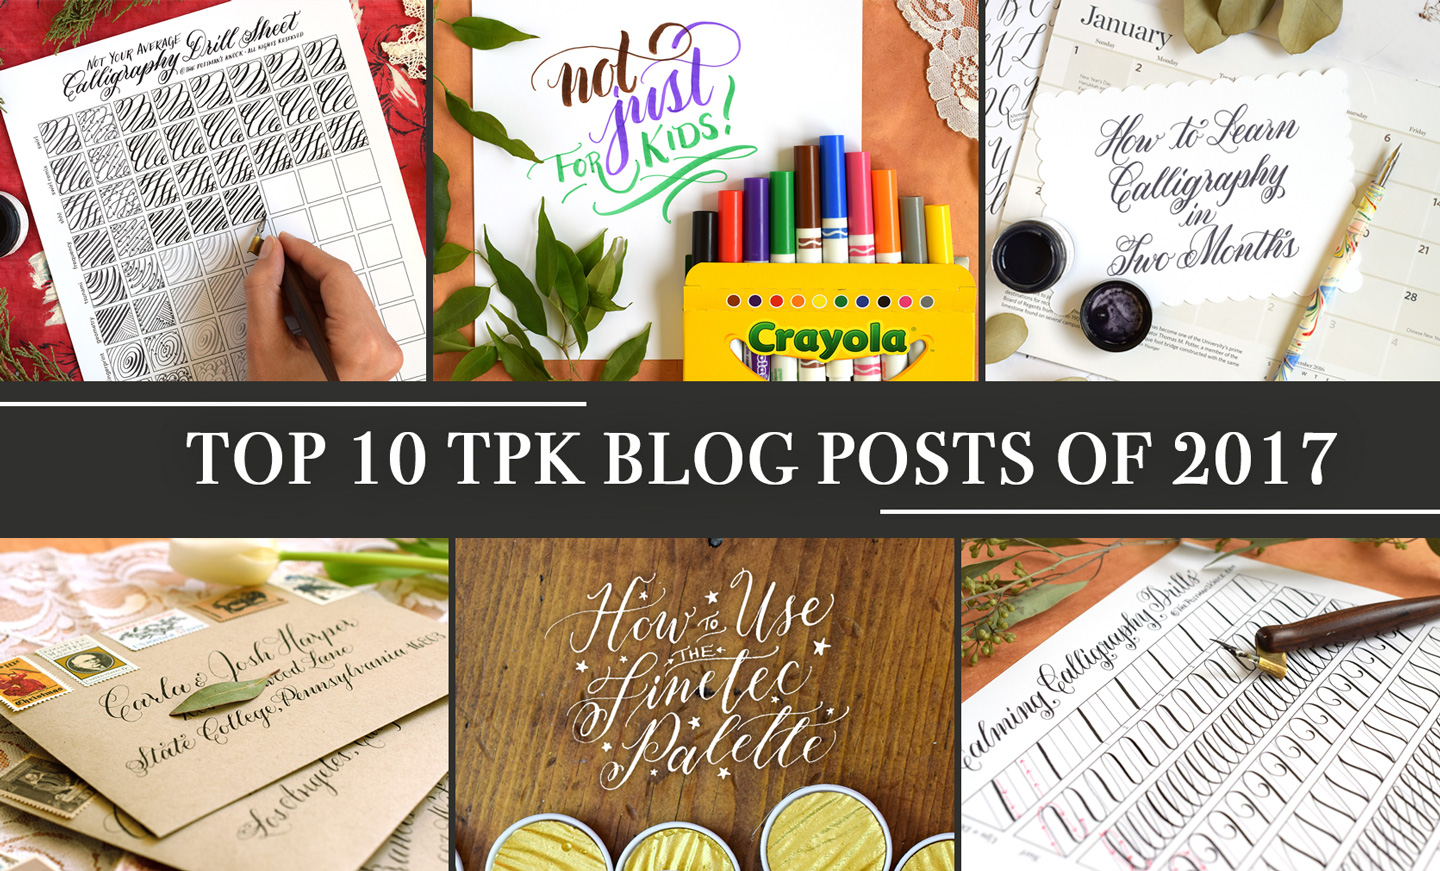 Top 10 TPK Blog Posts of 2017